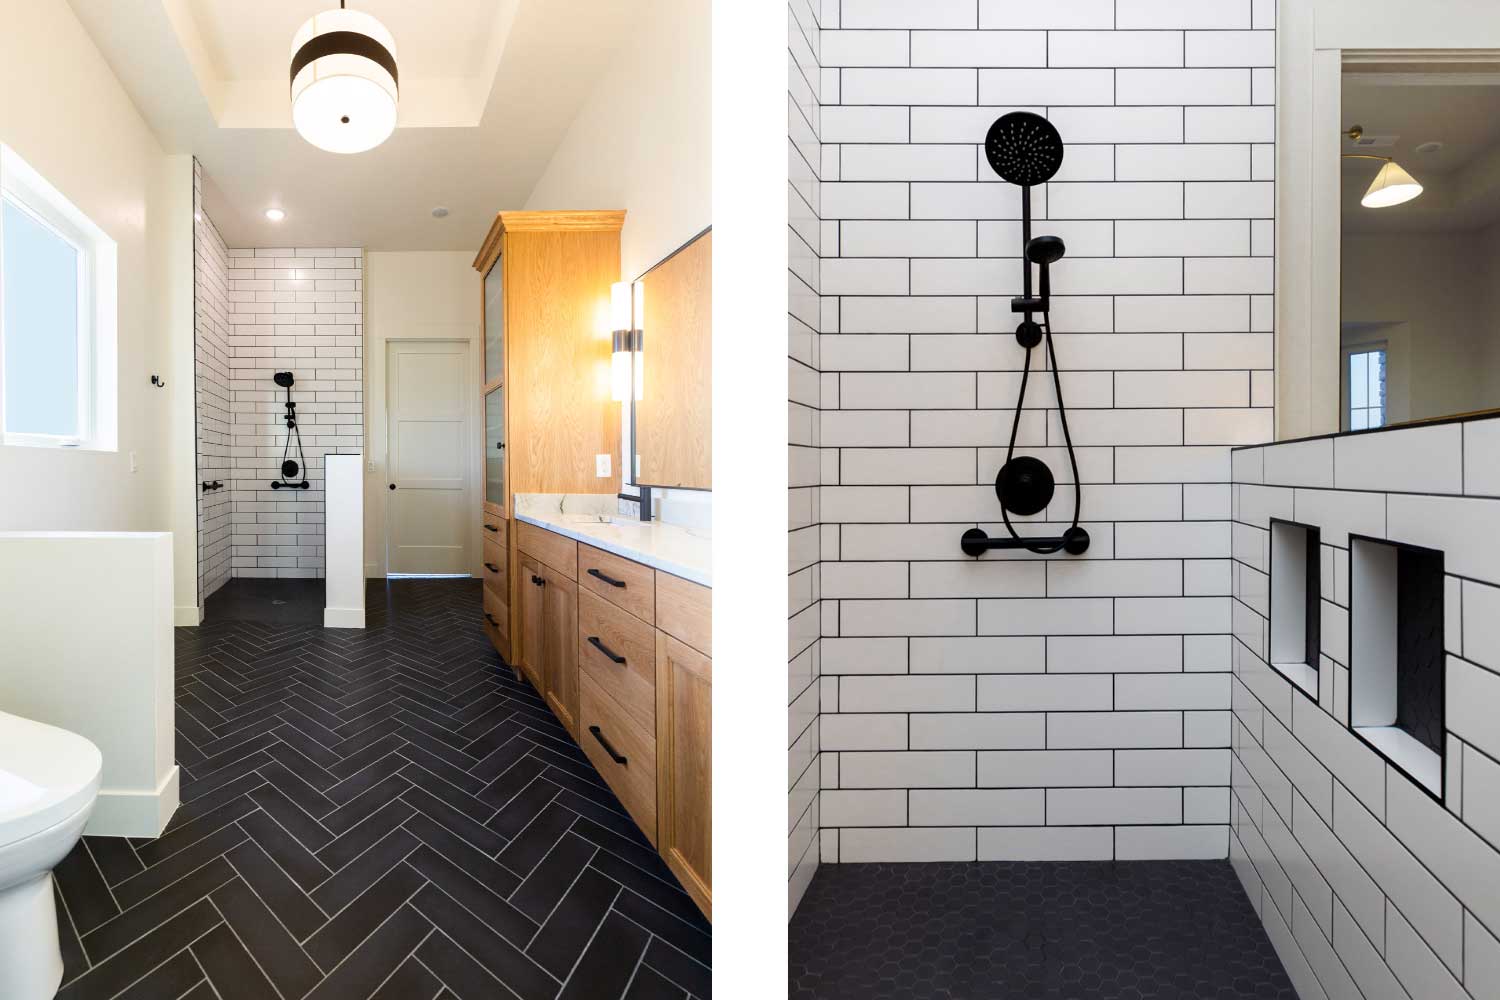 primary-bathroom-layout-and-custom-tile-work.jpg